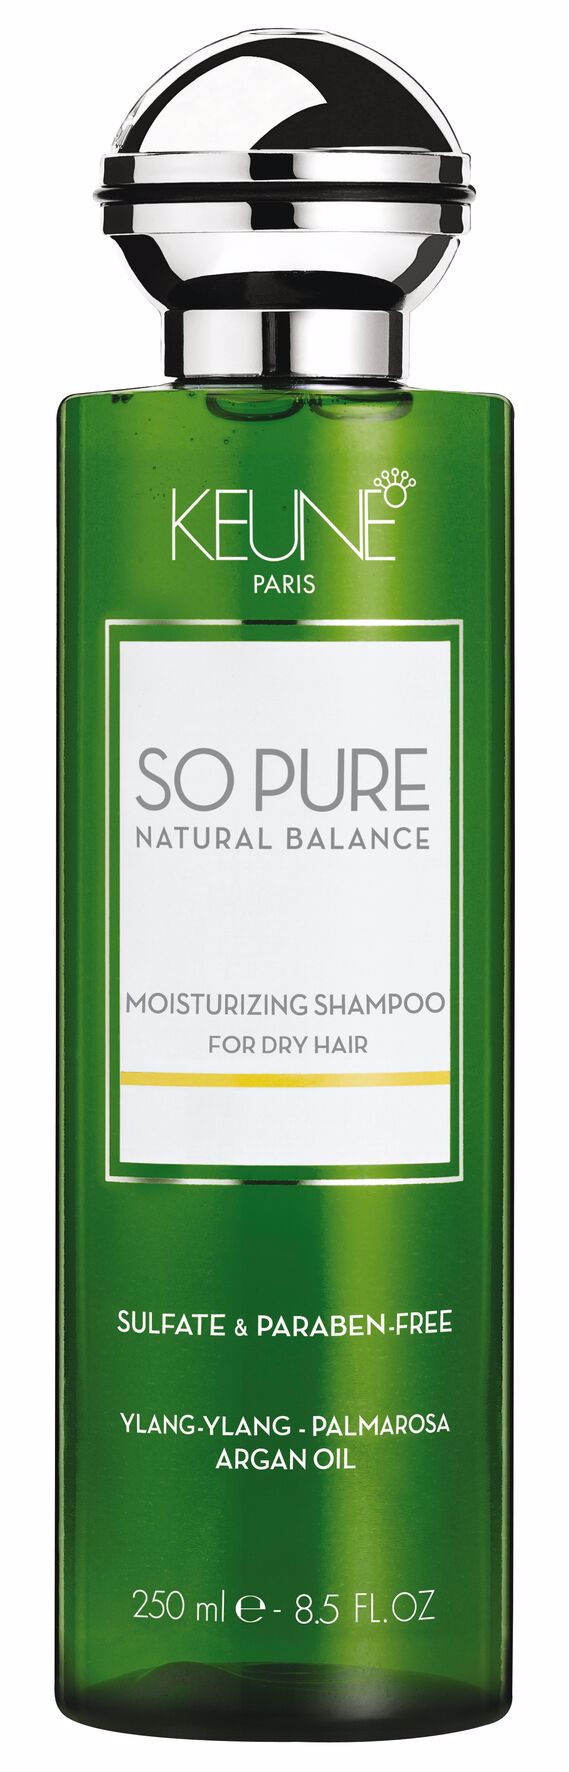 SP Moisturizing Shampoo, 250ml